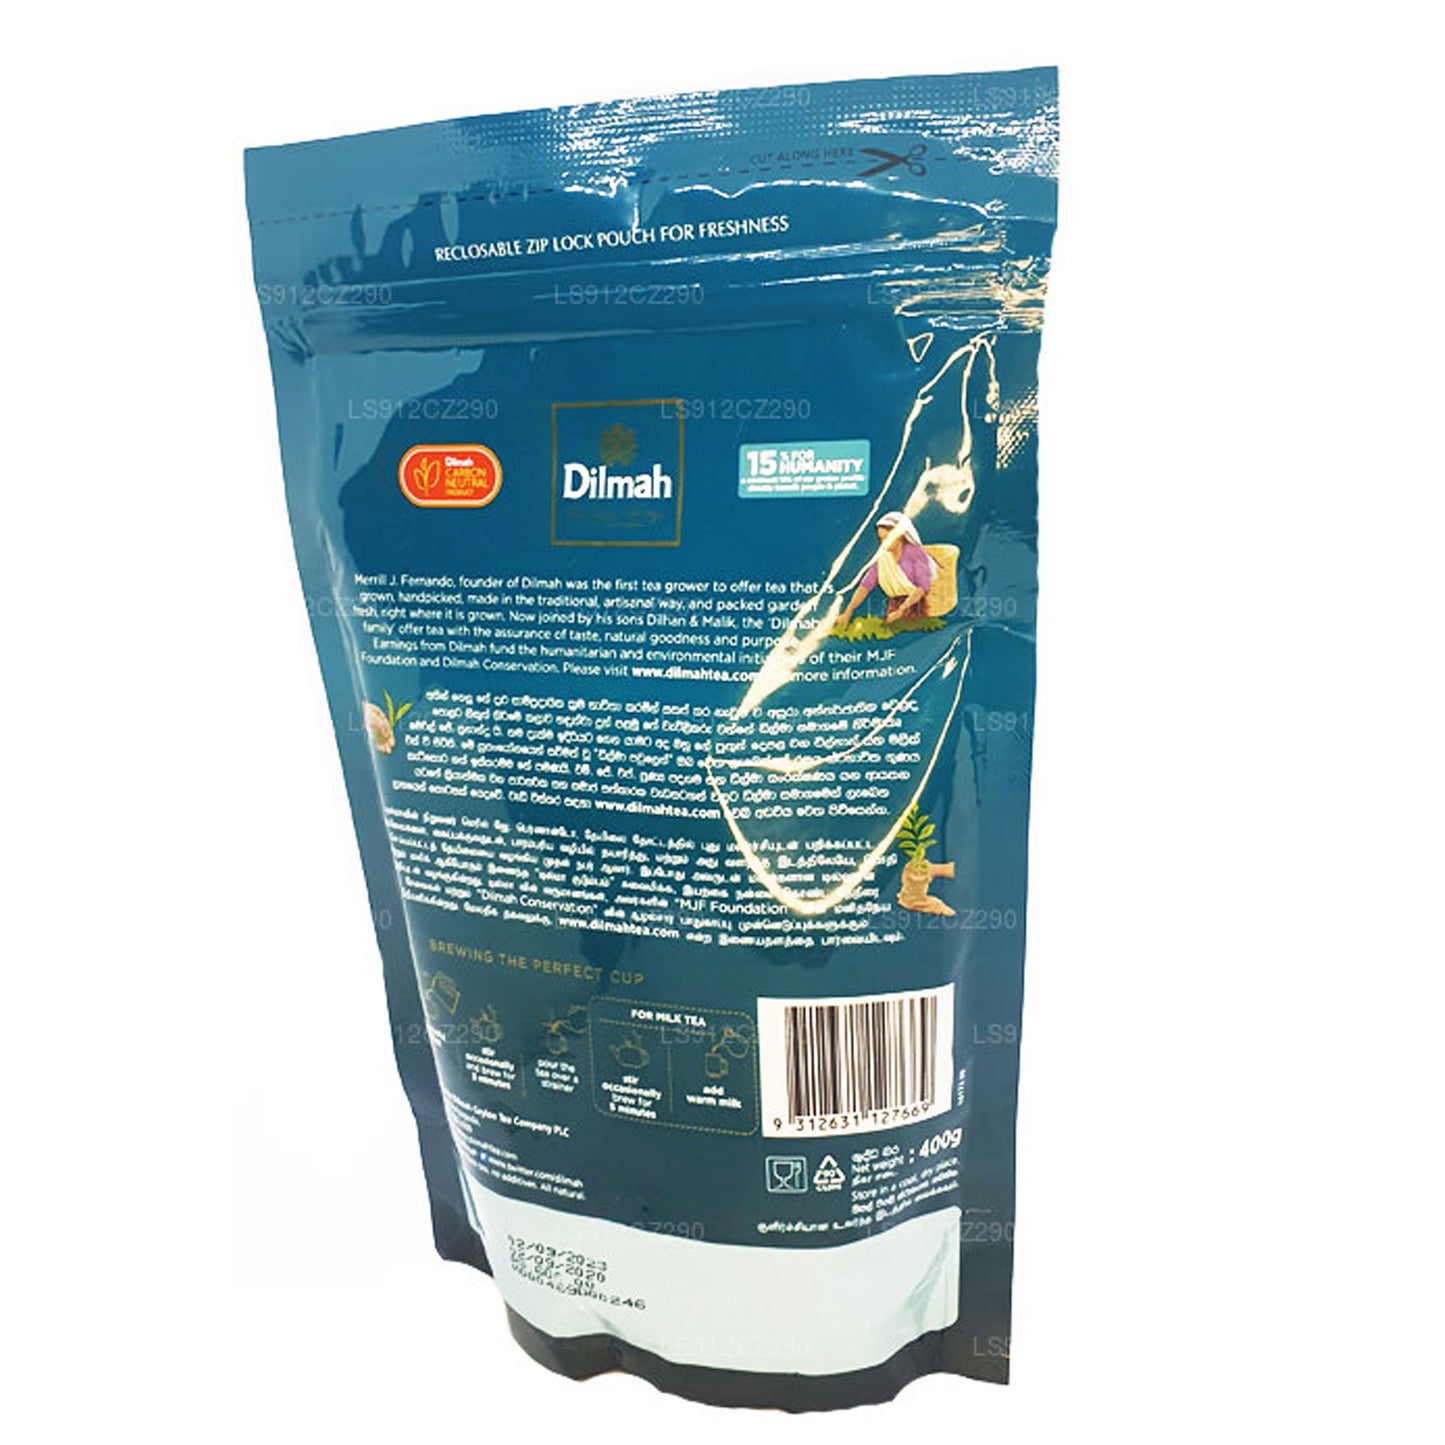 Dilmah Premium Ceylon Loose Leaf Black Tea BOPF (400g)